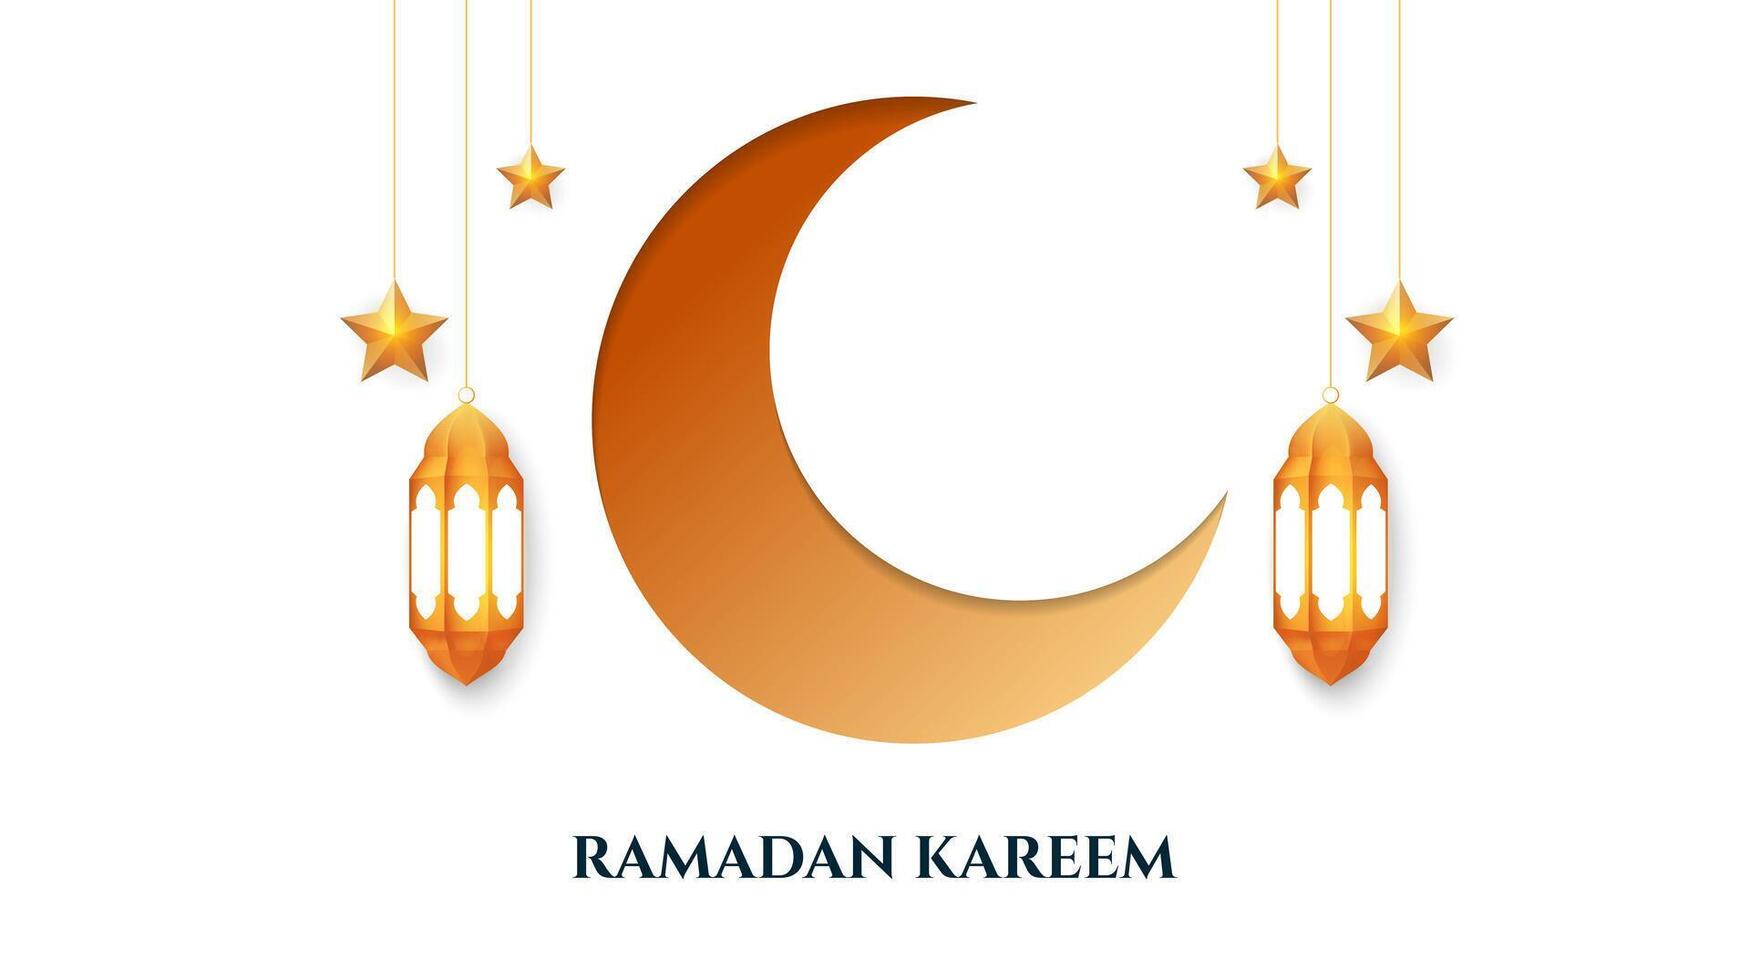 Ramadan kareem islamique Contexte conception. illustration vecteur